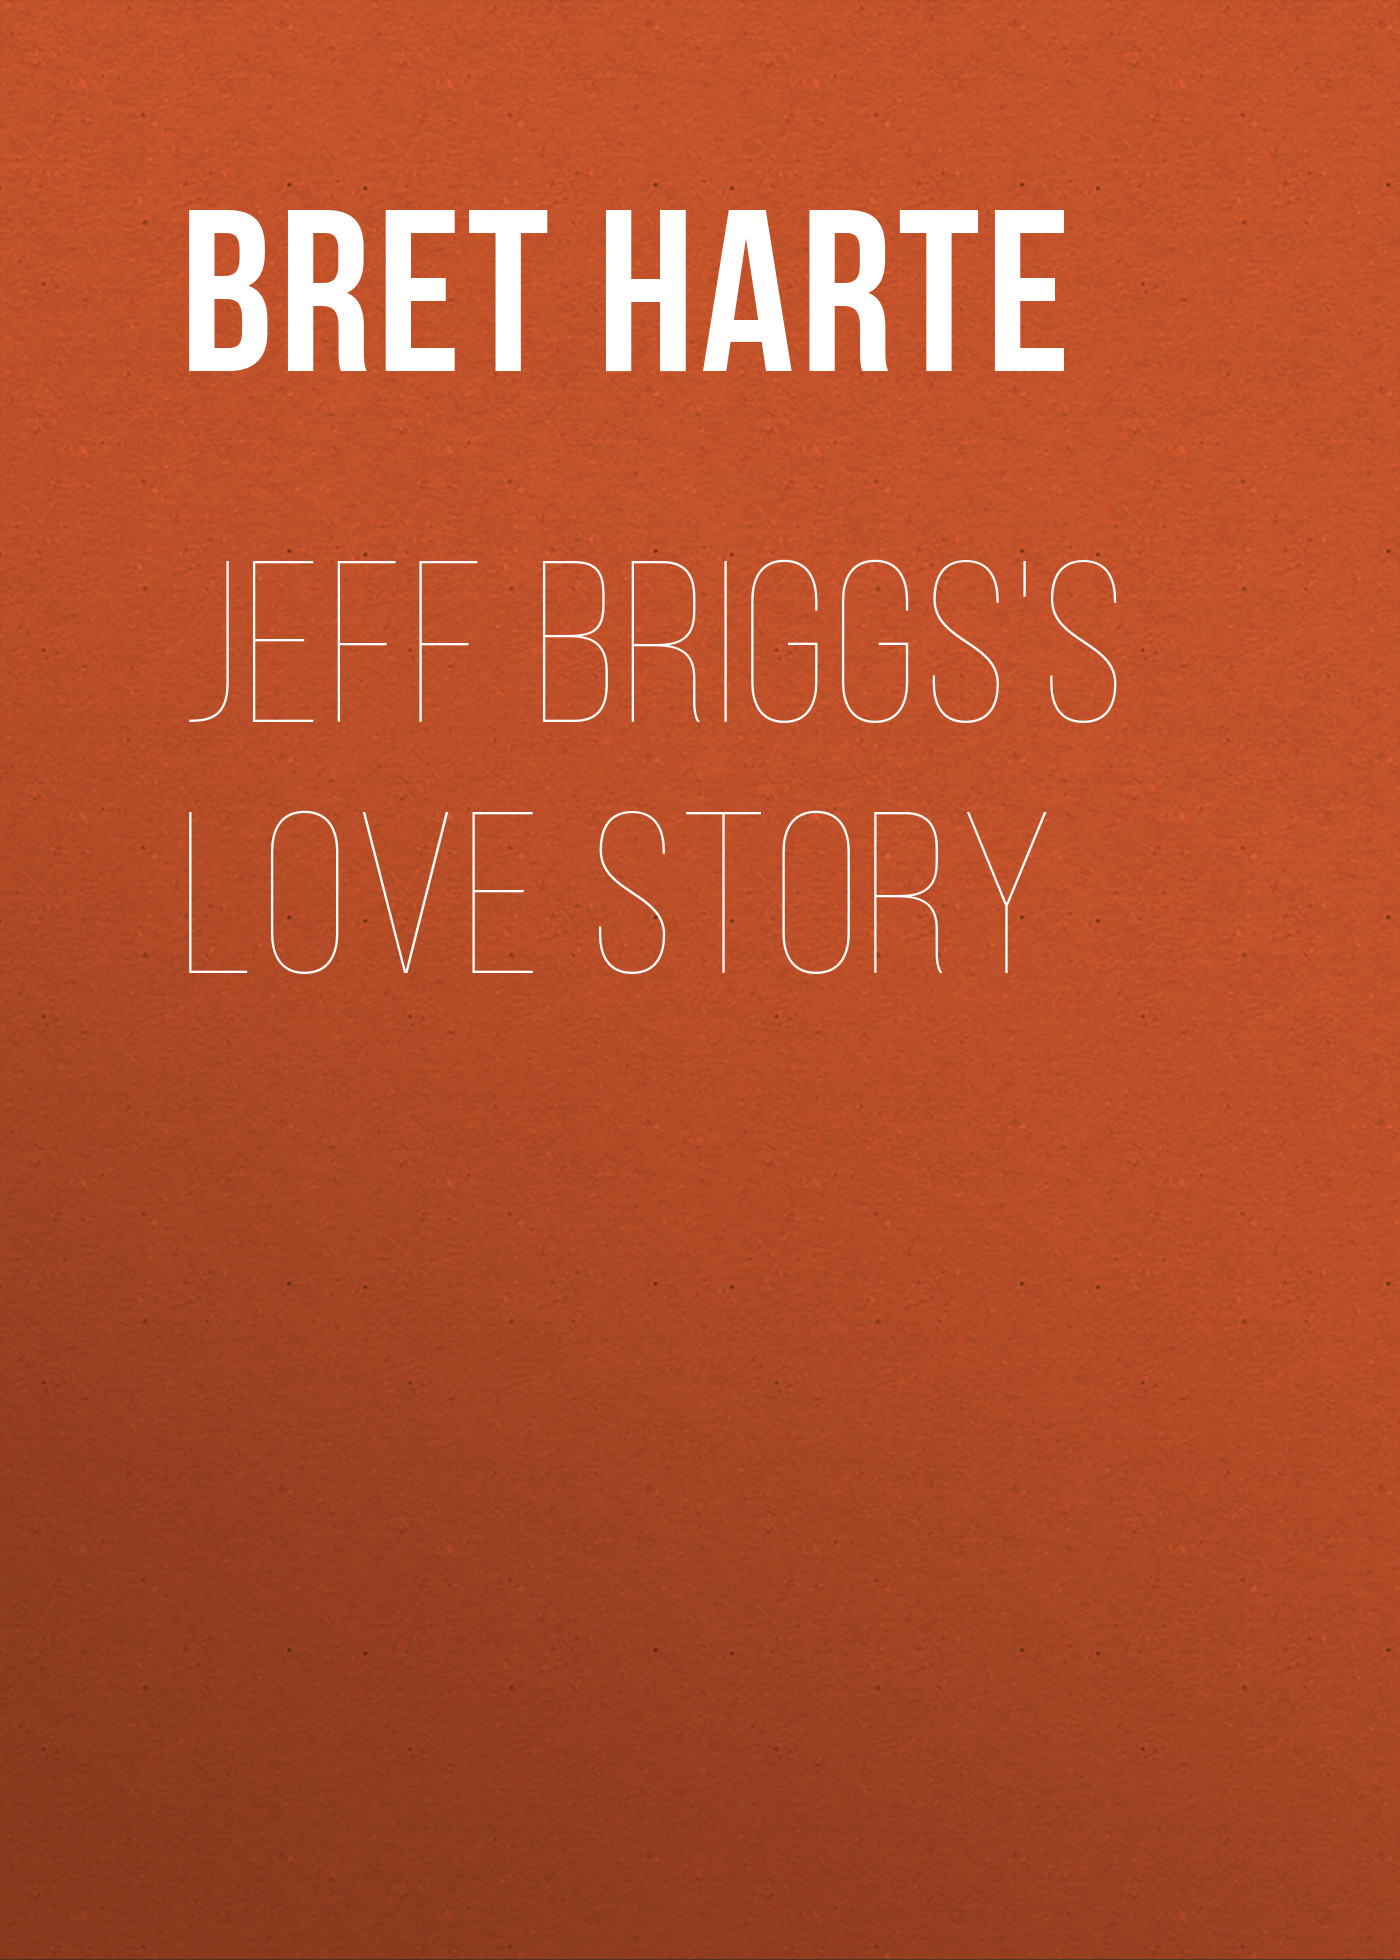 Jeff Briggs's Love Story